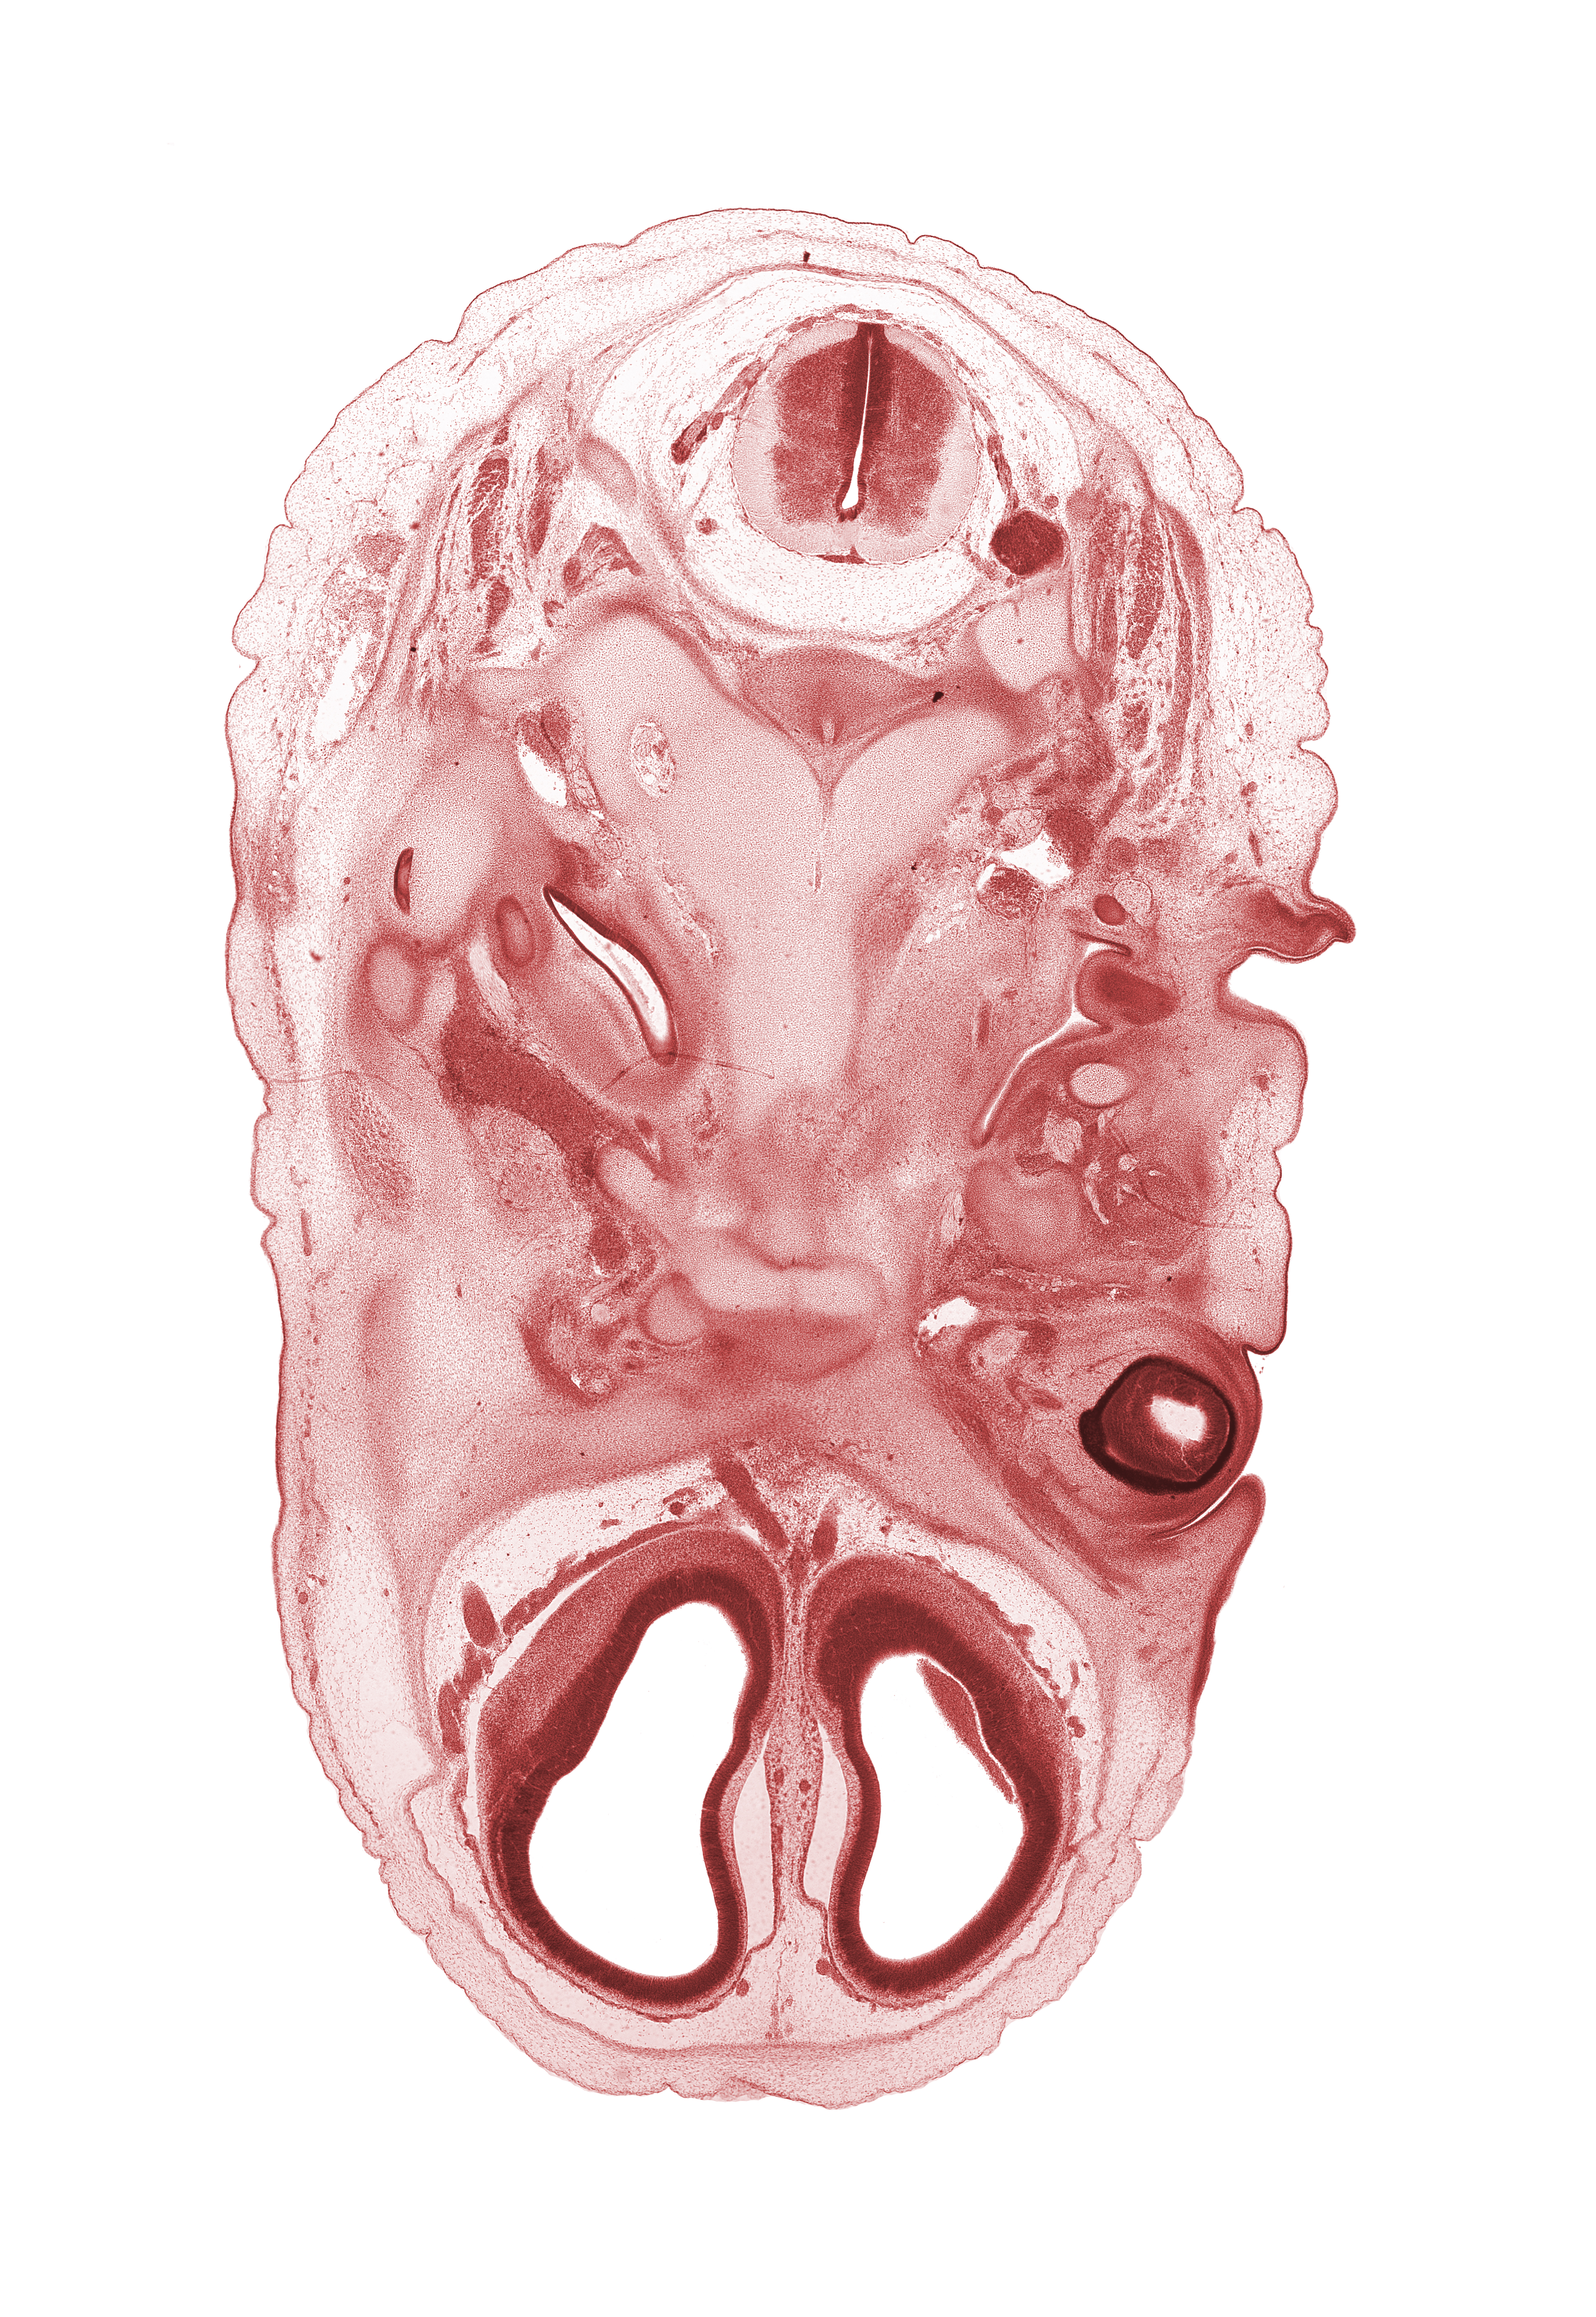 C-2 spinal ganglion, accessory nerve (CN XI), anterior cerebral artery, artifact separation(s), basi-occipital (basal plate), basisphenoid, cochlear duct, external acoustic meatus, facial nerve (CN VII), falx cerebri region, hypoglossal canal, hypoglossal nerve (CN XII), inferior ganglion of glossopharyngeal nerve (CN IX), intermediate zone, internal jugular vein, malleus cartilage, marginal zone, maxillary nerve (CN V₂), optic nerve (CN II), pharyngotympanic tube, spinal accessory nerve (CN XI), subarachnoid space, vagus nerve (CN X), ventricular zone